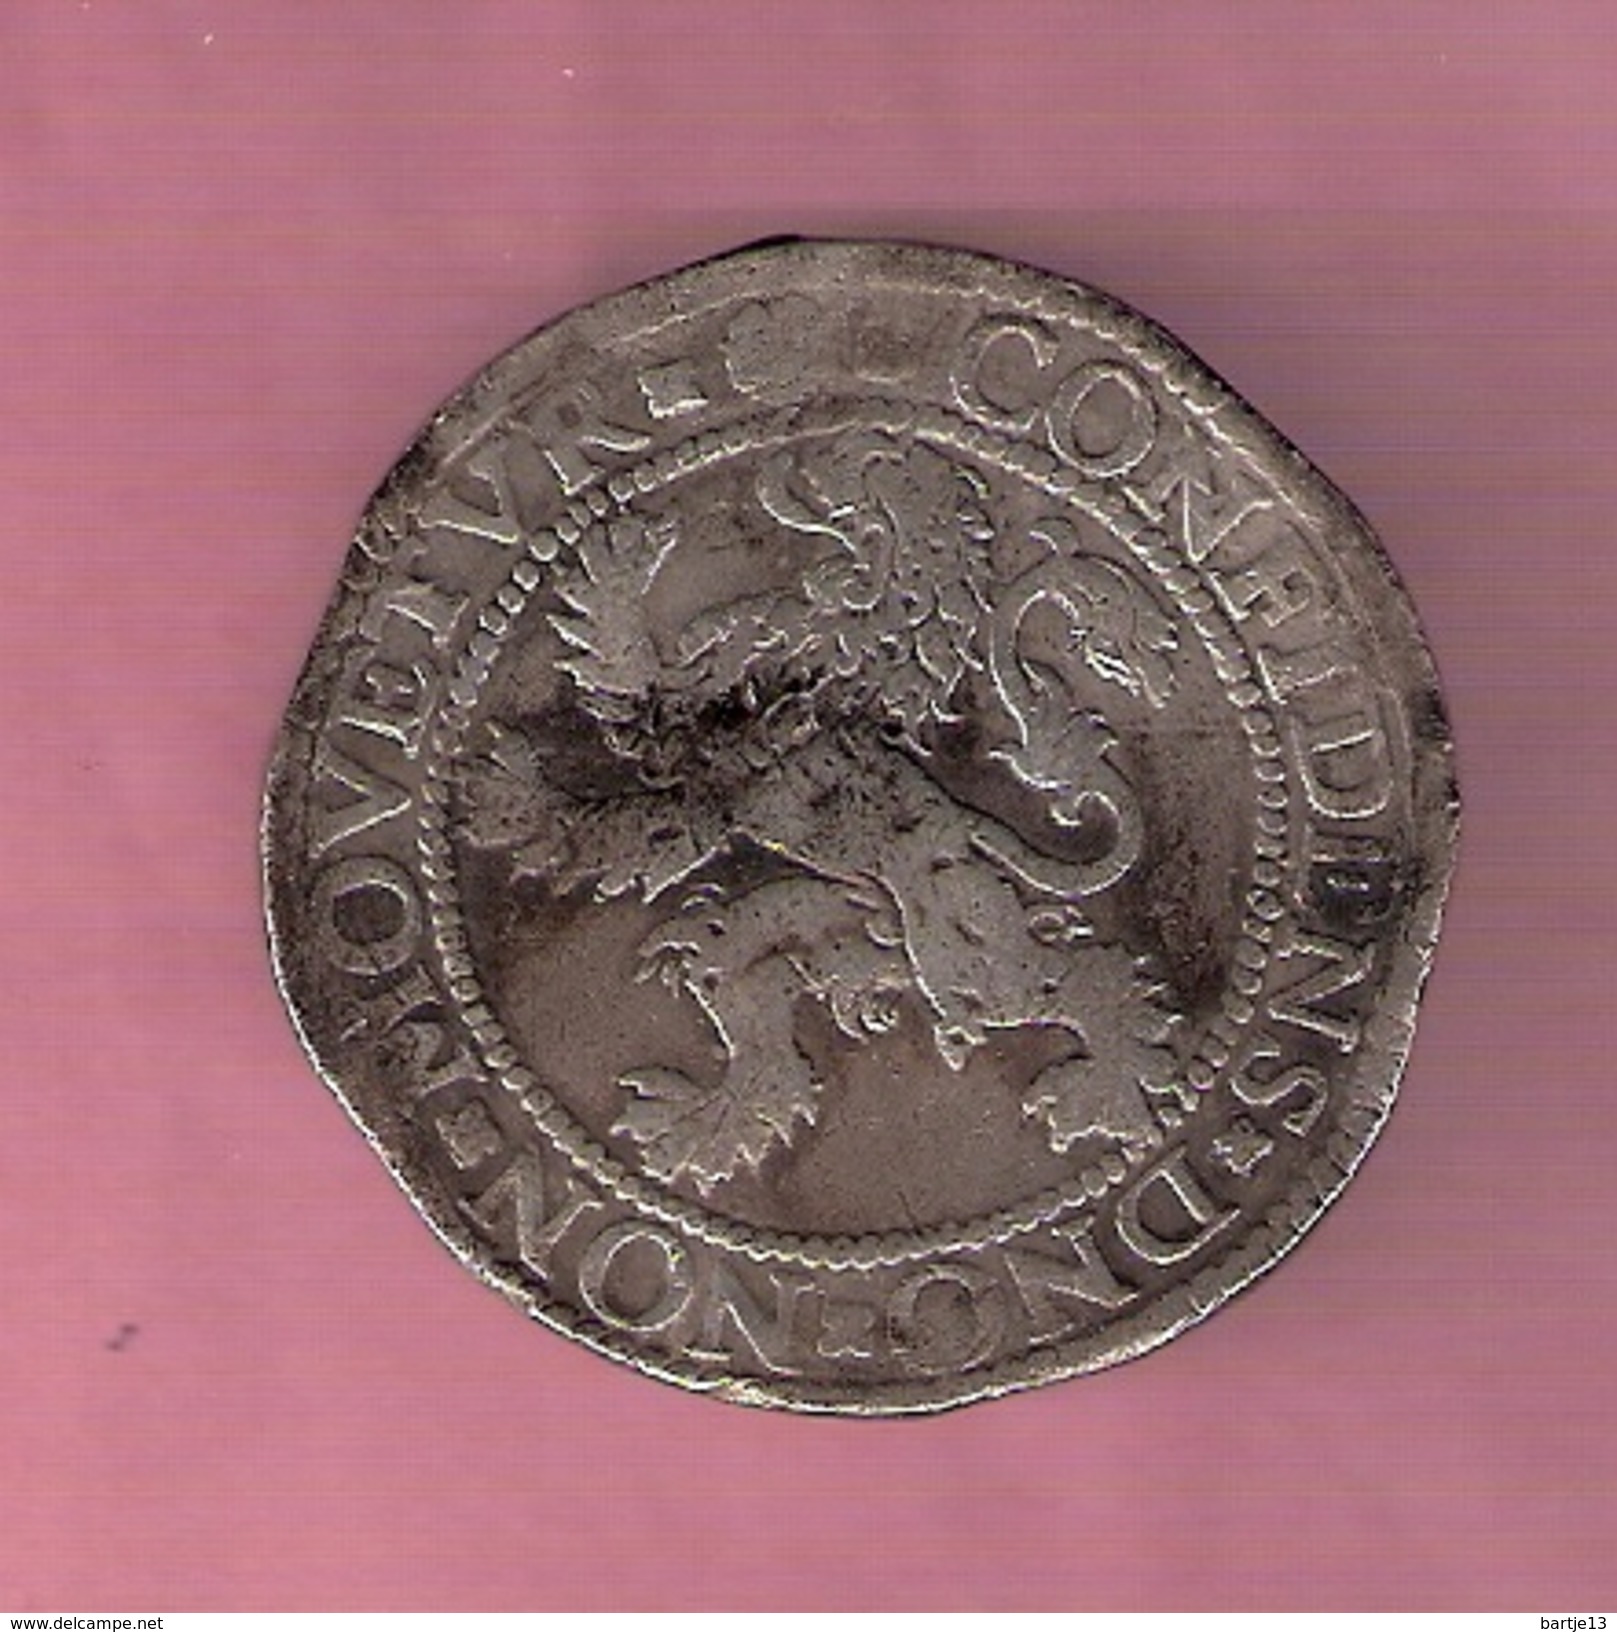 HOLLAND LEEUWENDAALDER (48 STUIVERS) 1576 - Monnaies Provinciales